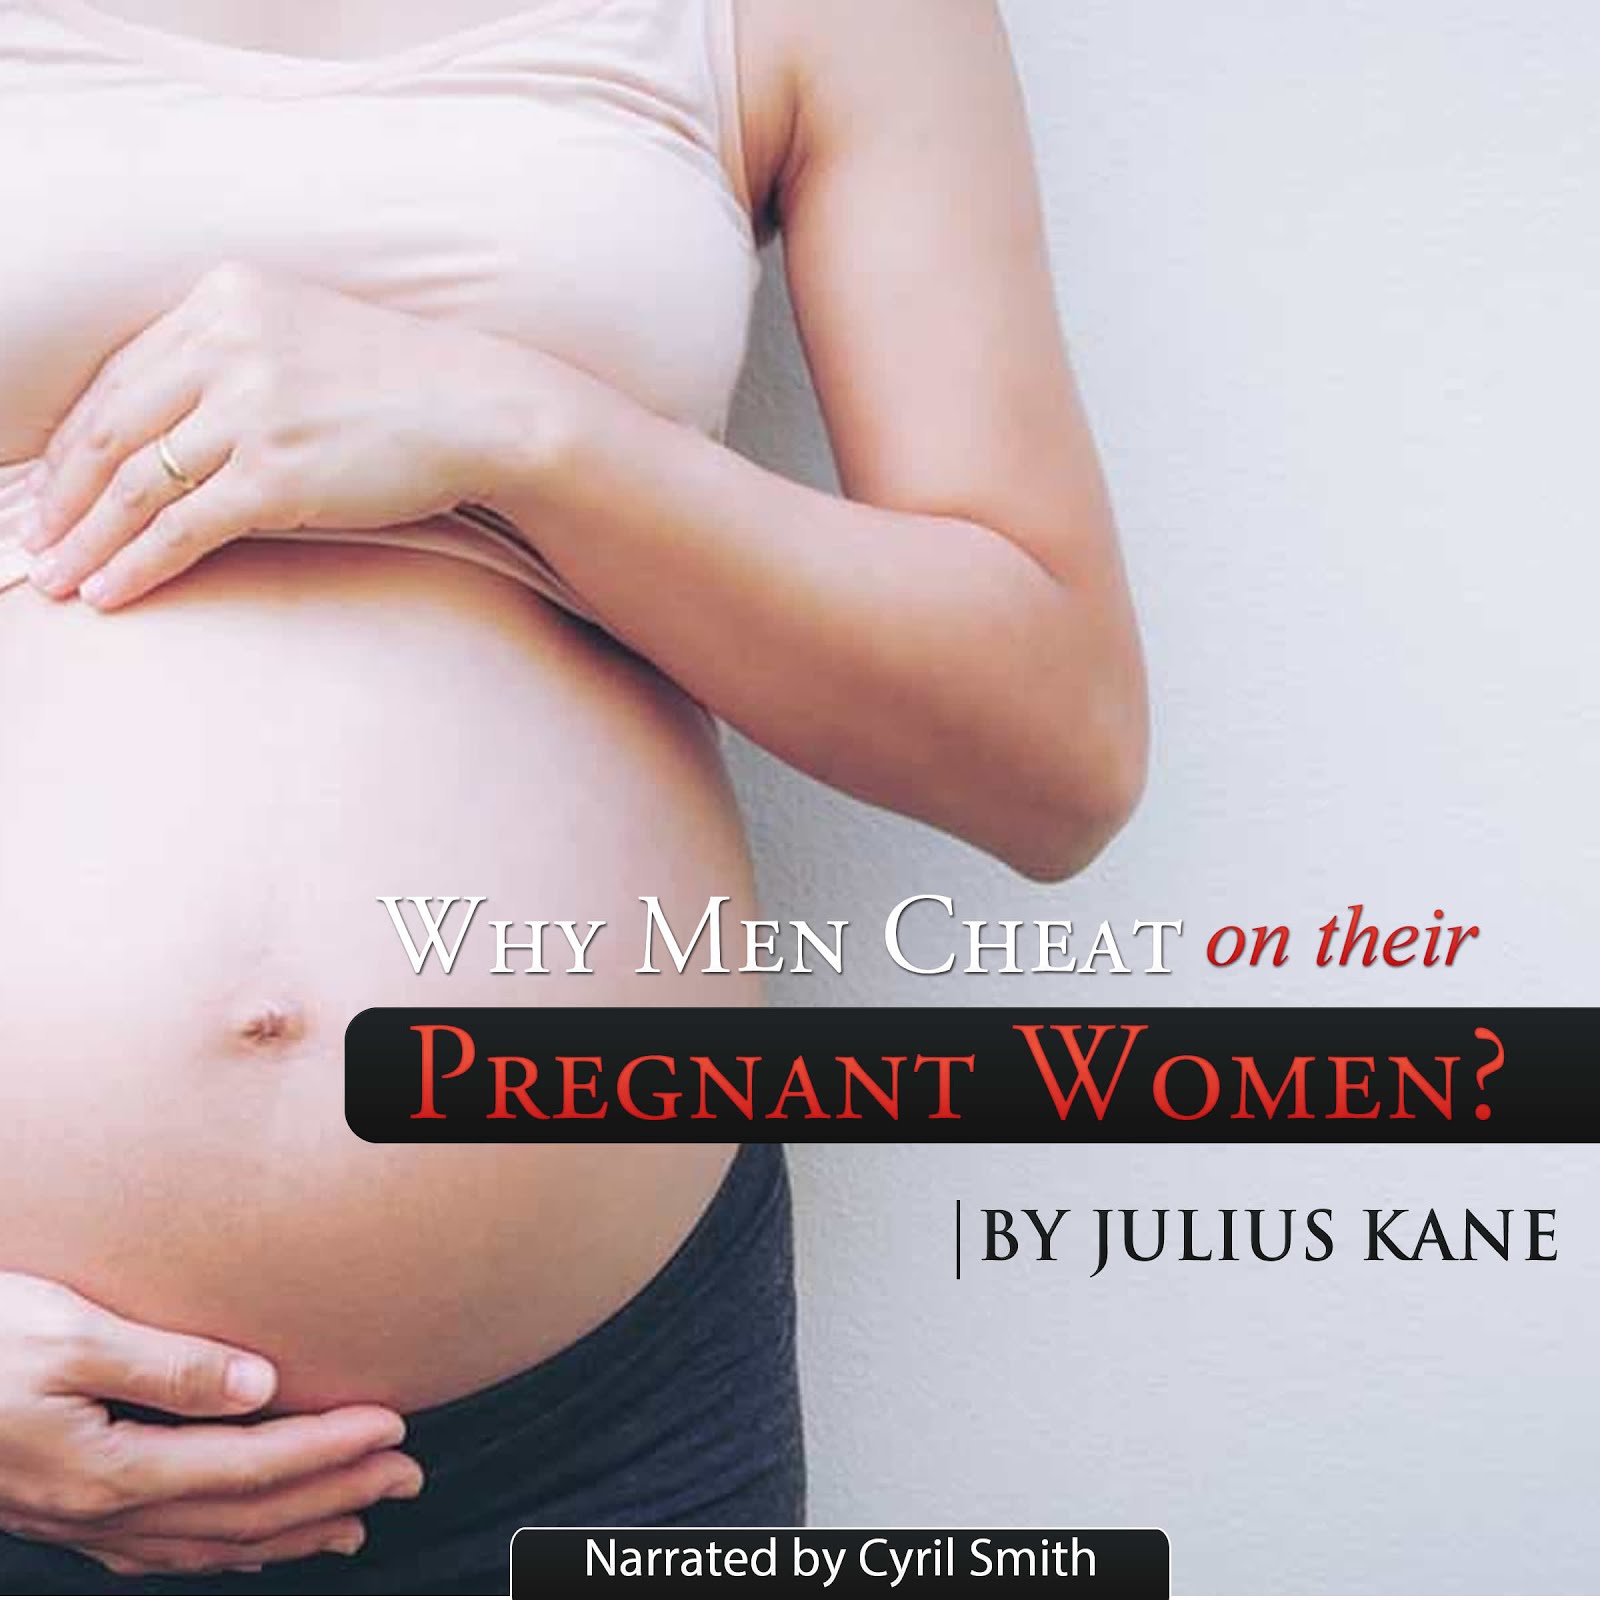 Why Men Cheat on their Pregnant Women?